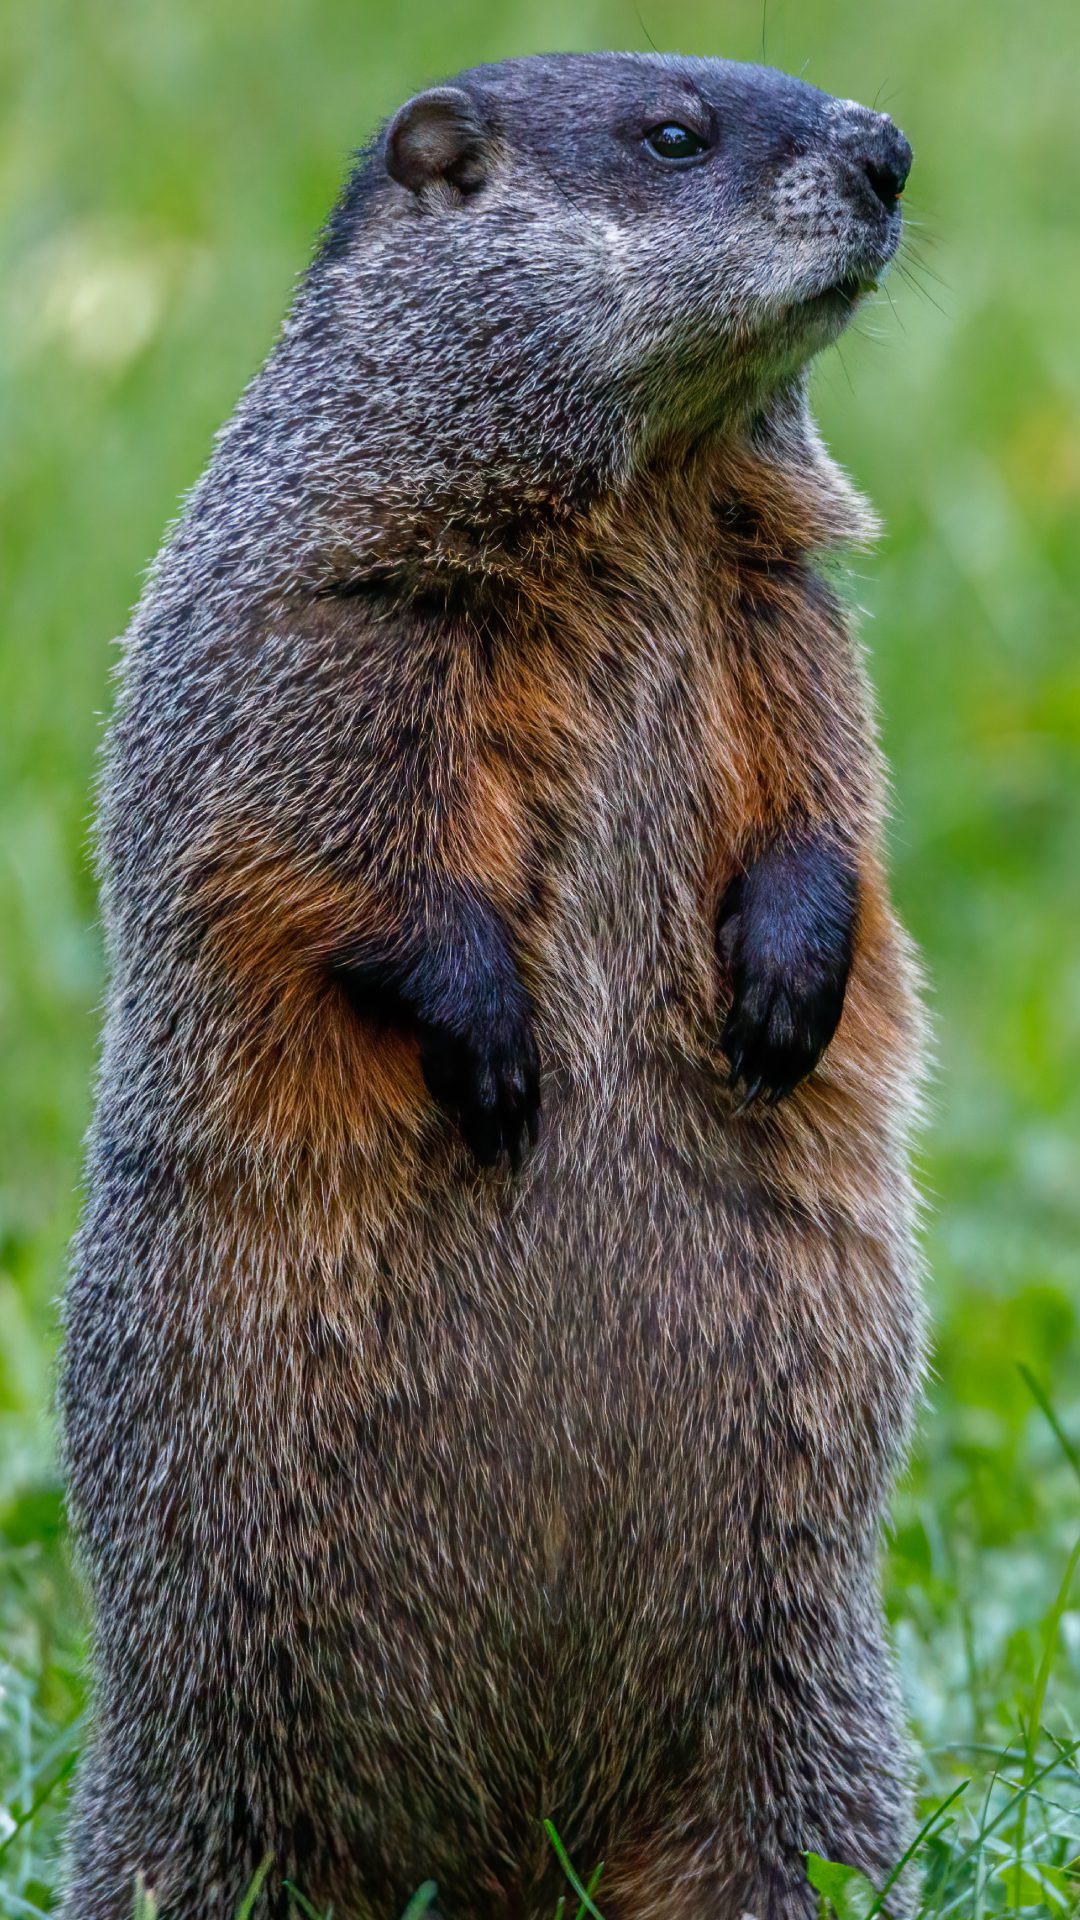 Marmottes inoffensives mais intrusives